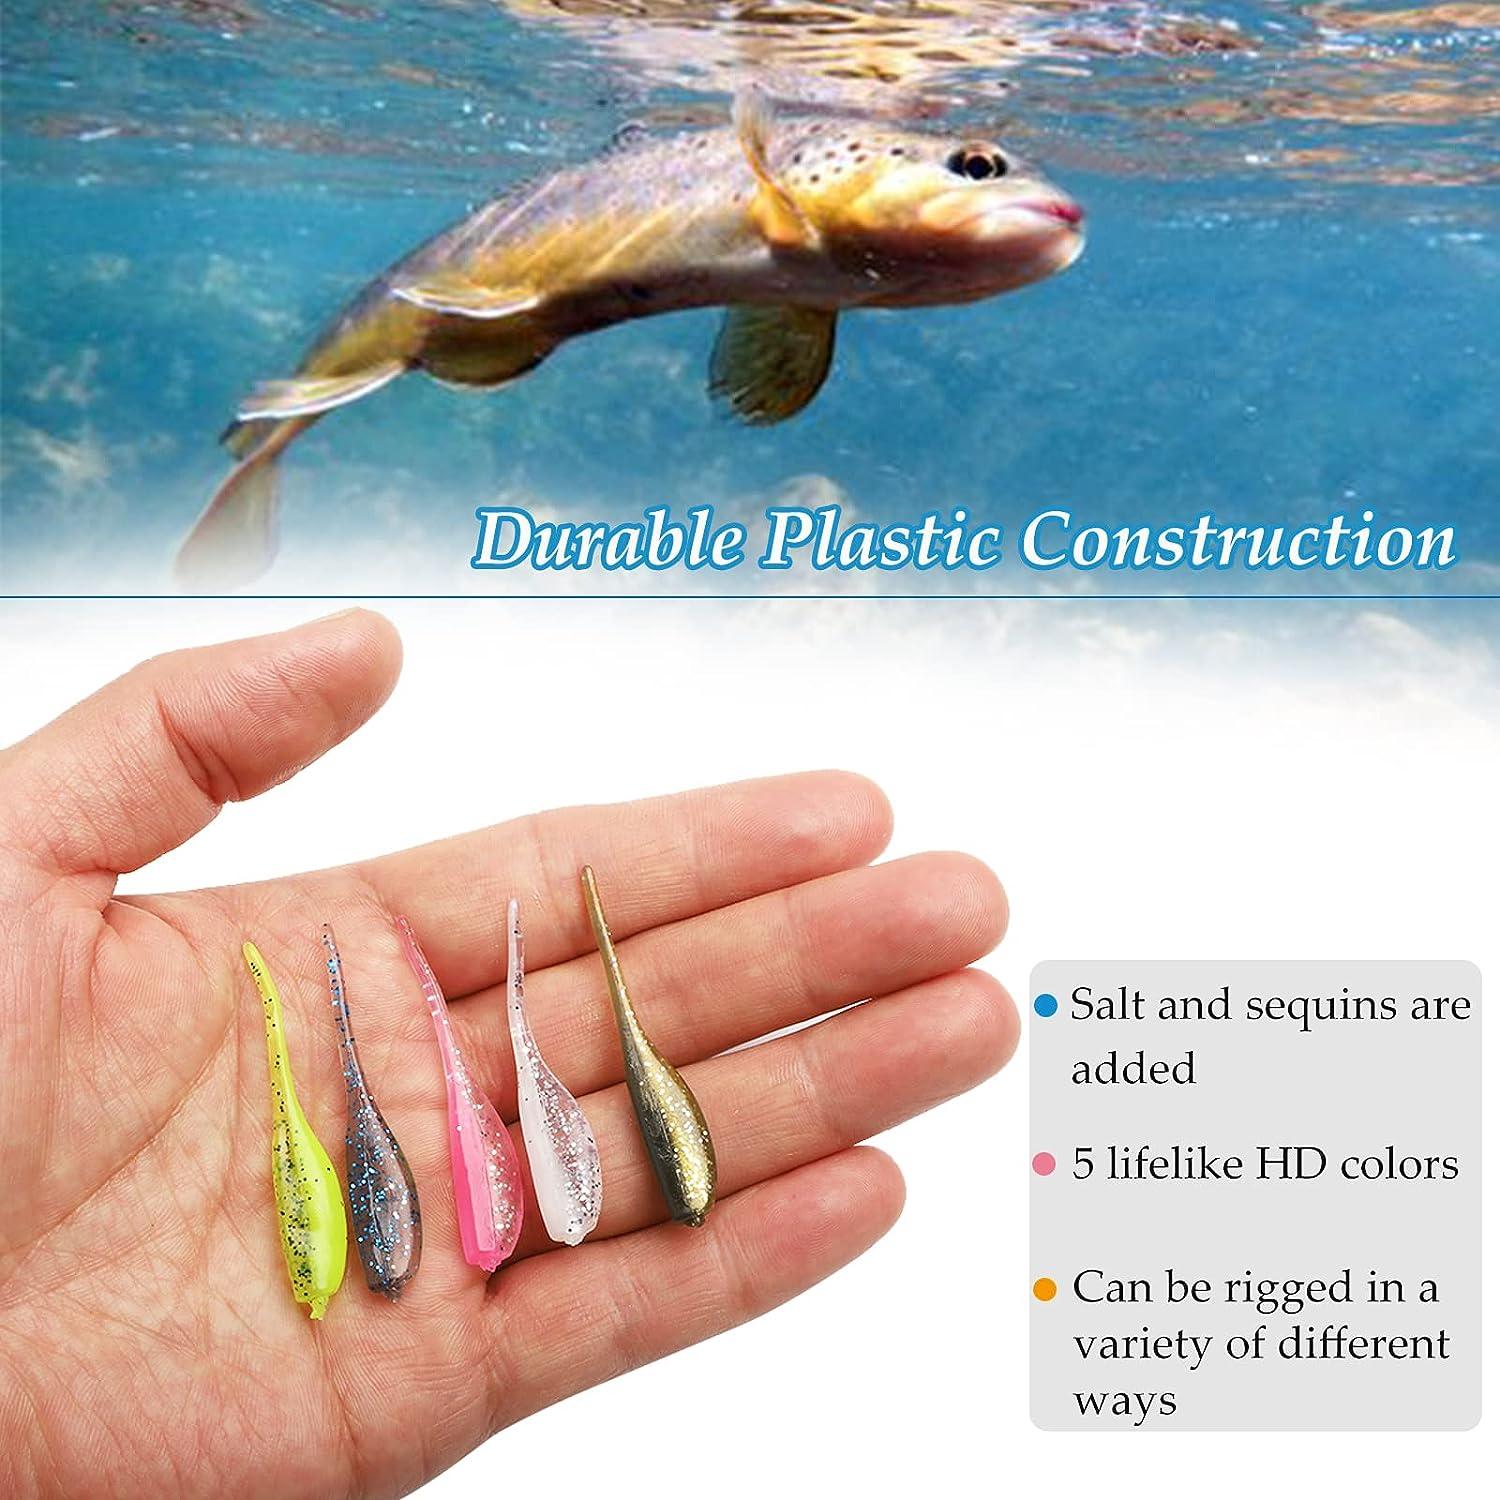 Dovesun Crappie Lures Kit, Soft Plastic Fishing Lures Crappie